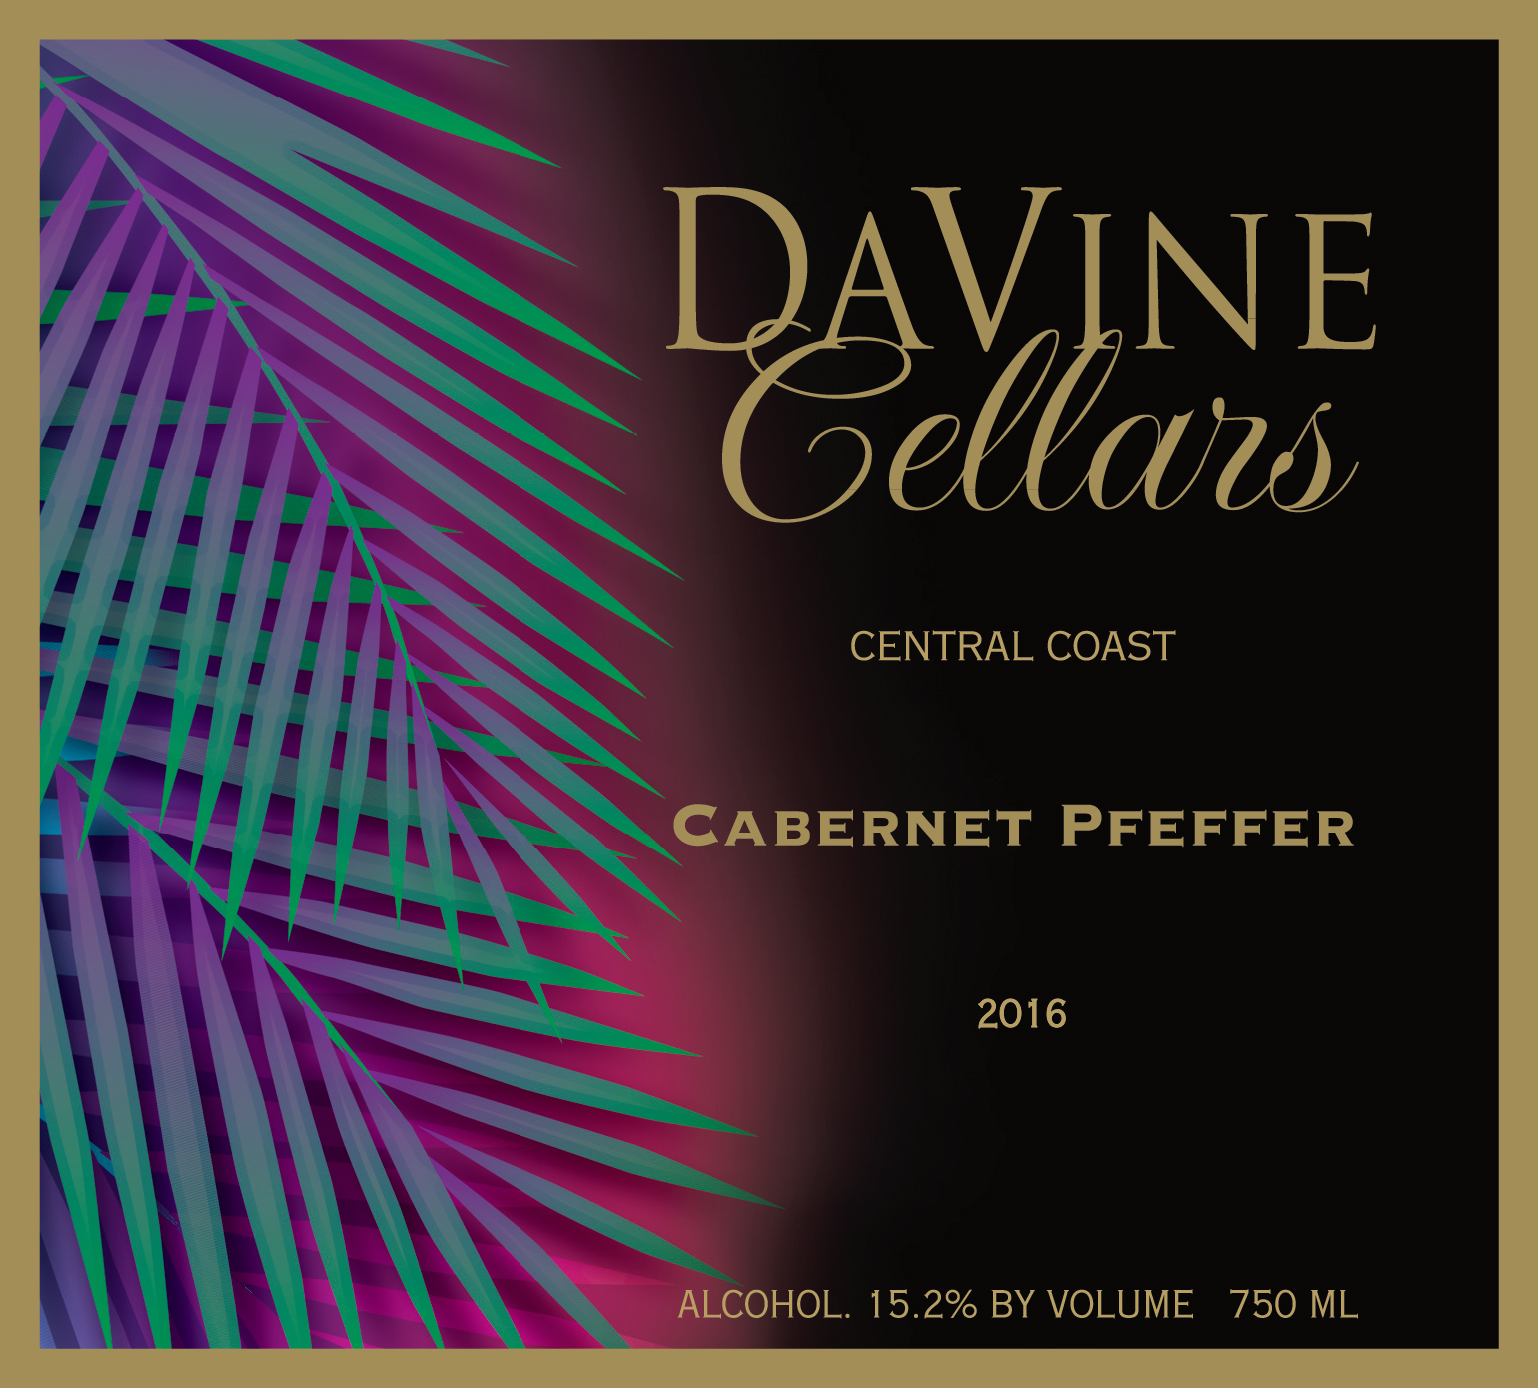 Product Image for 2016 Central Coast Pfeffer Cabernet "Bullseye"